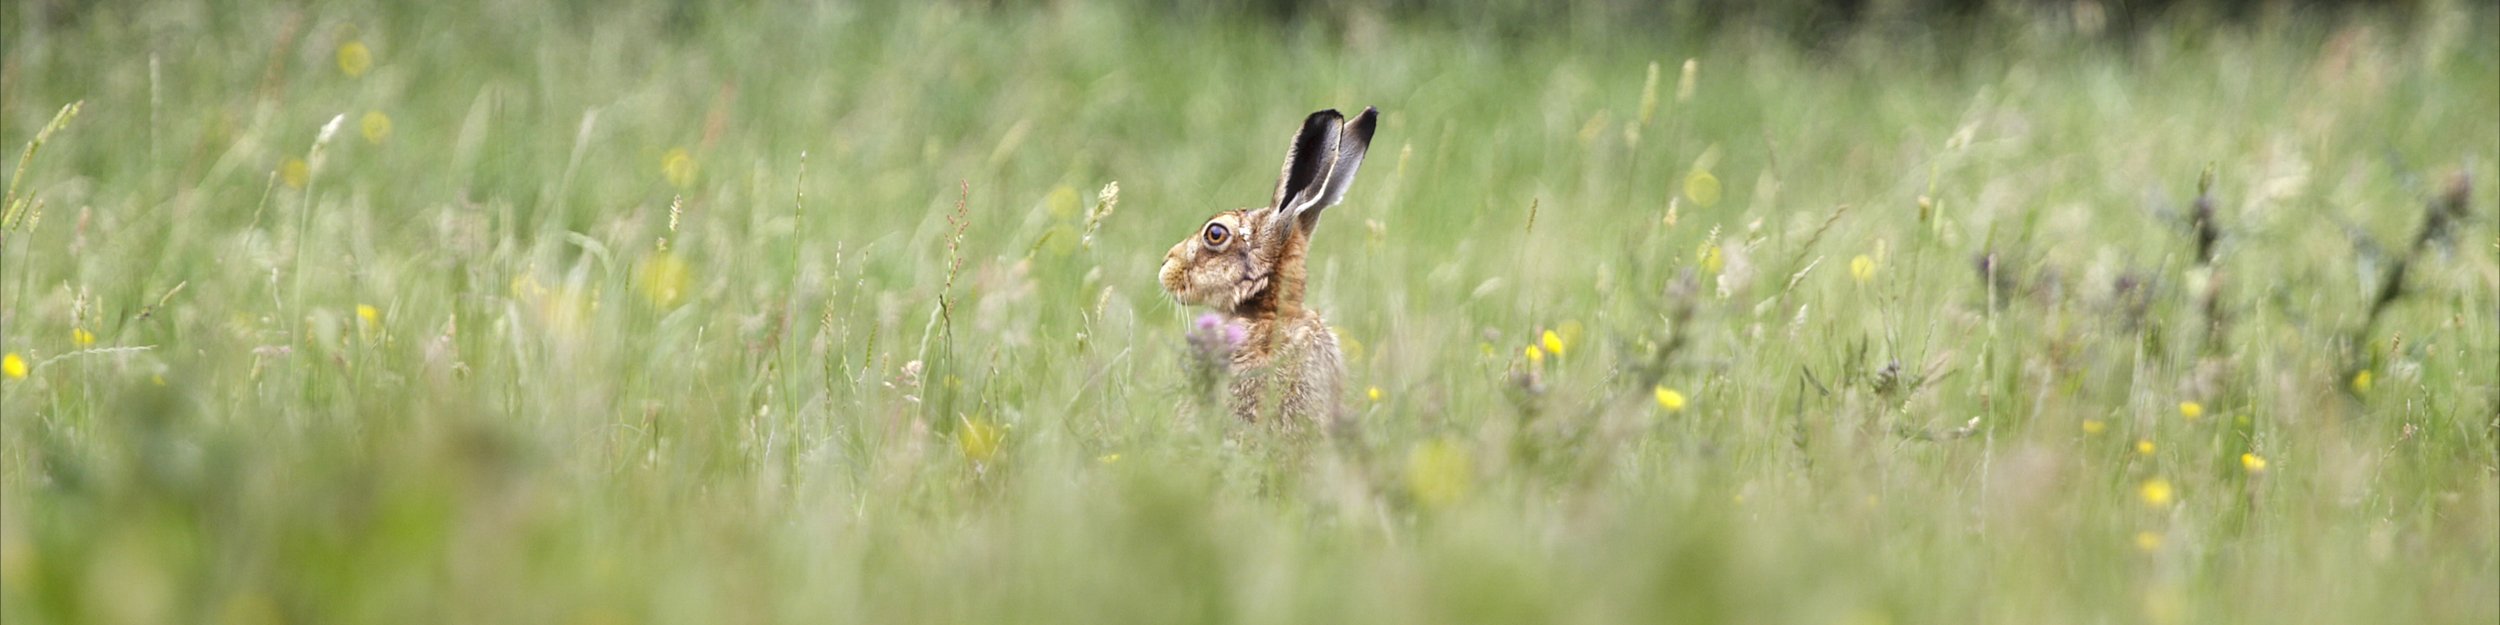 Raising the Hare.jpeg